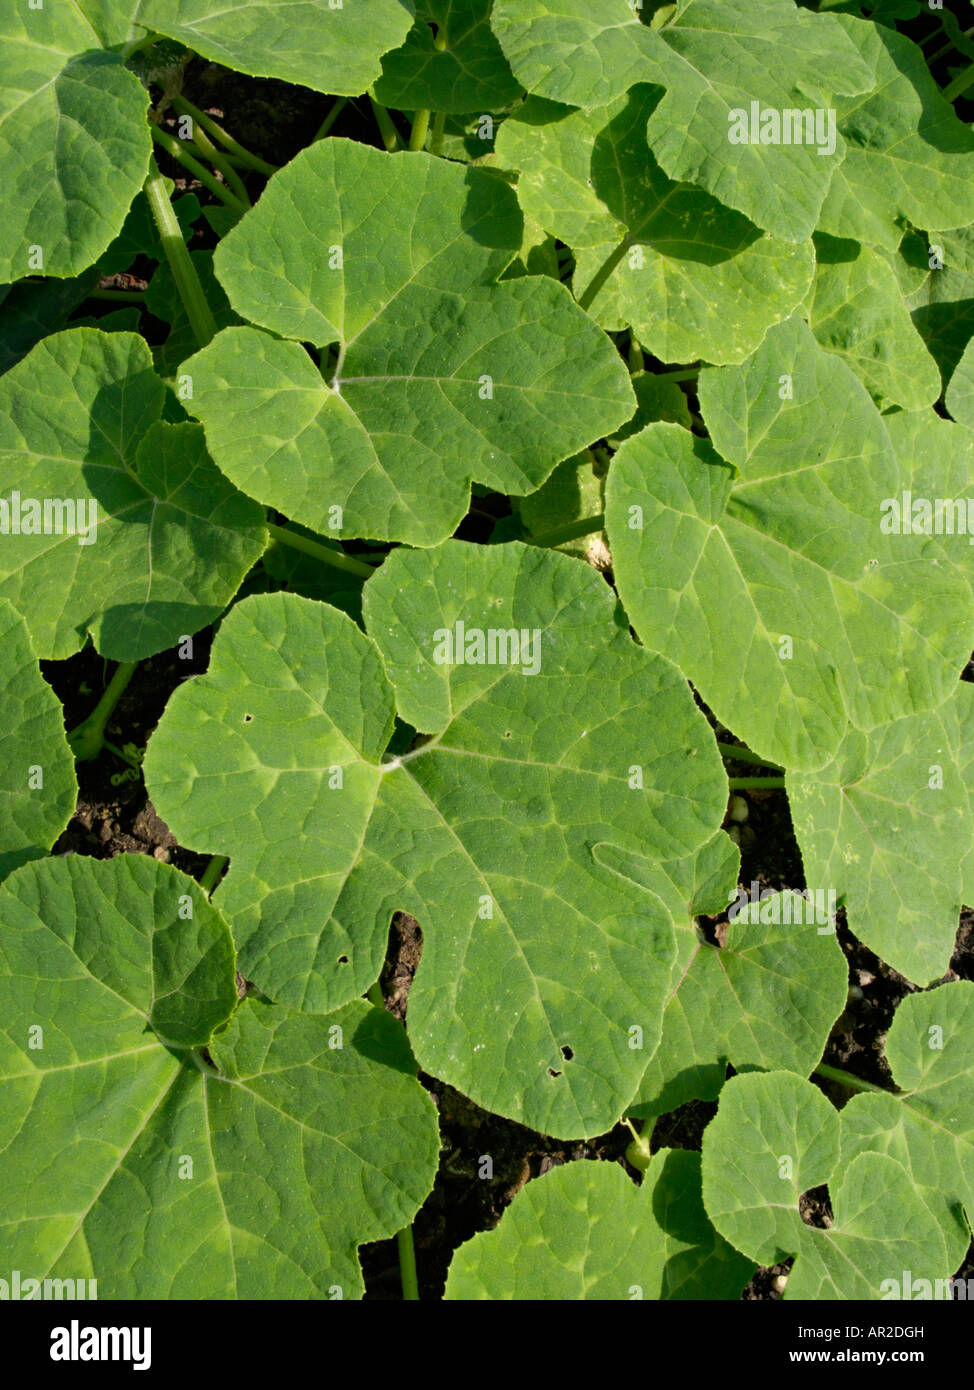 Fig-leaved squash (Cucurbita ficifolia) Stock Photo